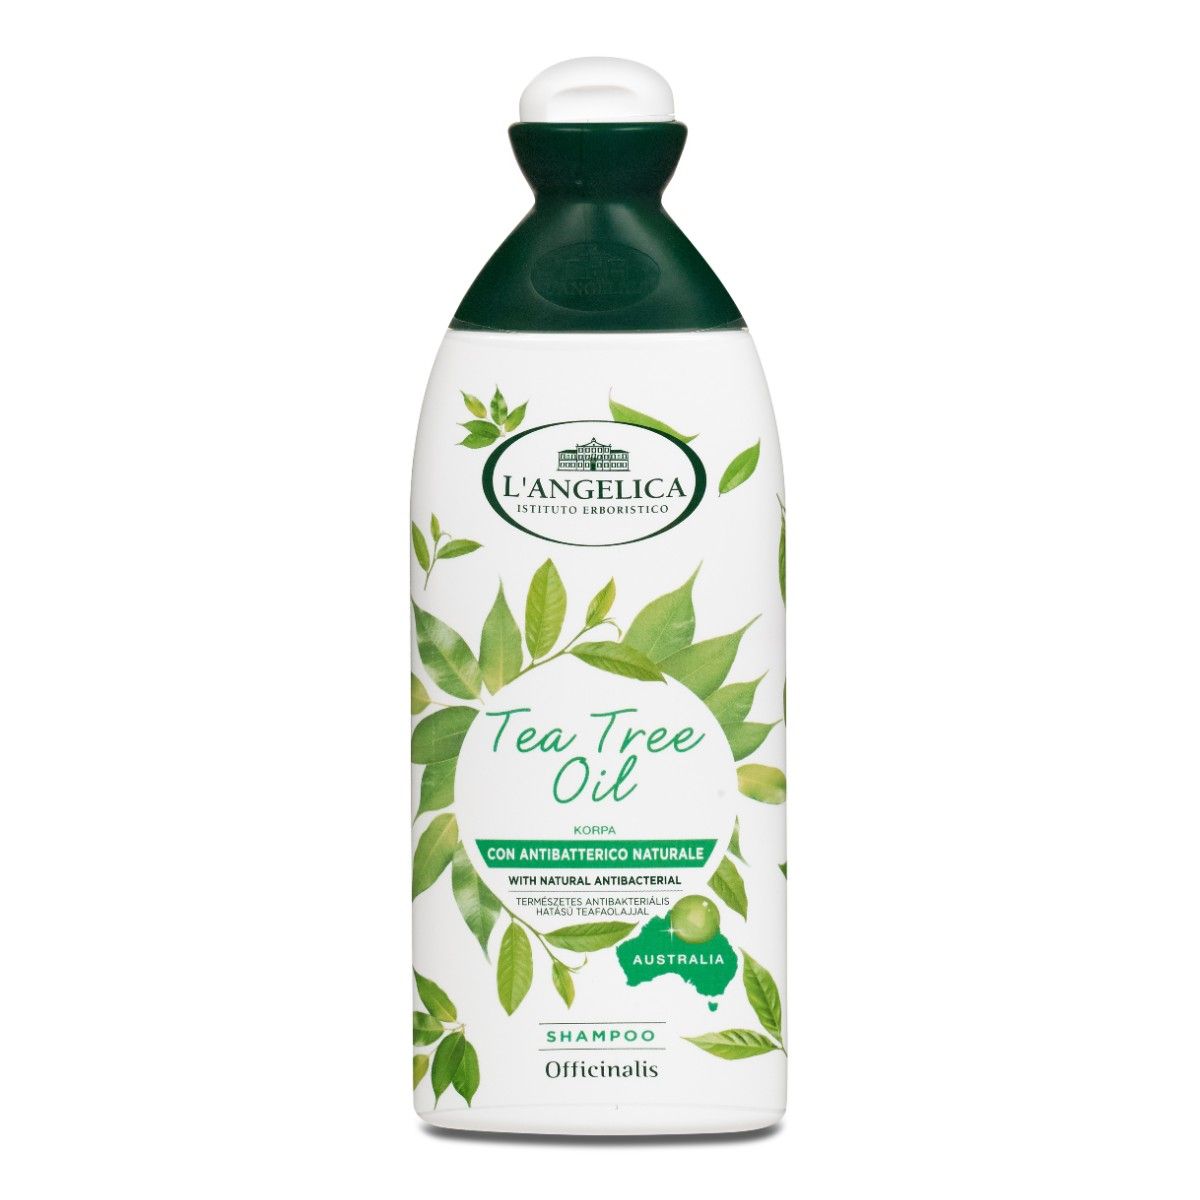 Shampoo Tea Tree Oil con Antibatterico Naturale